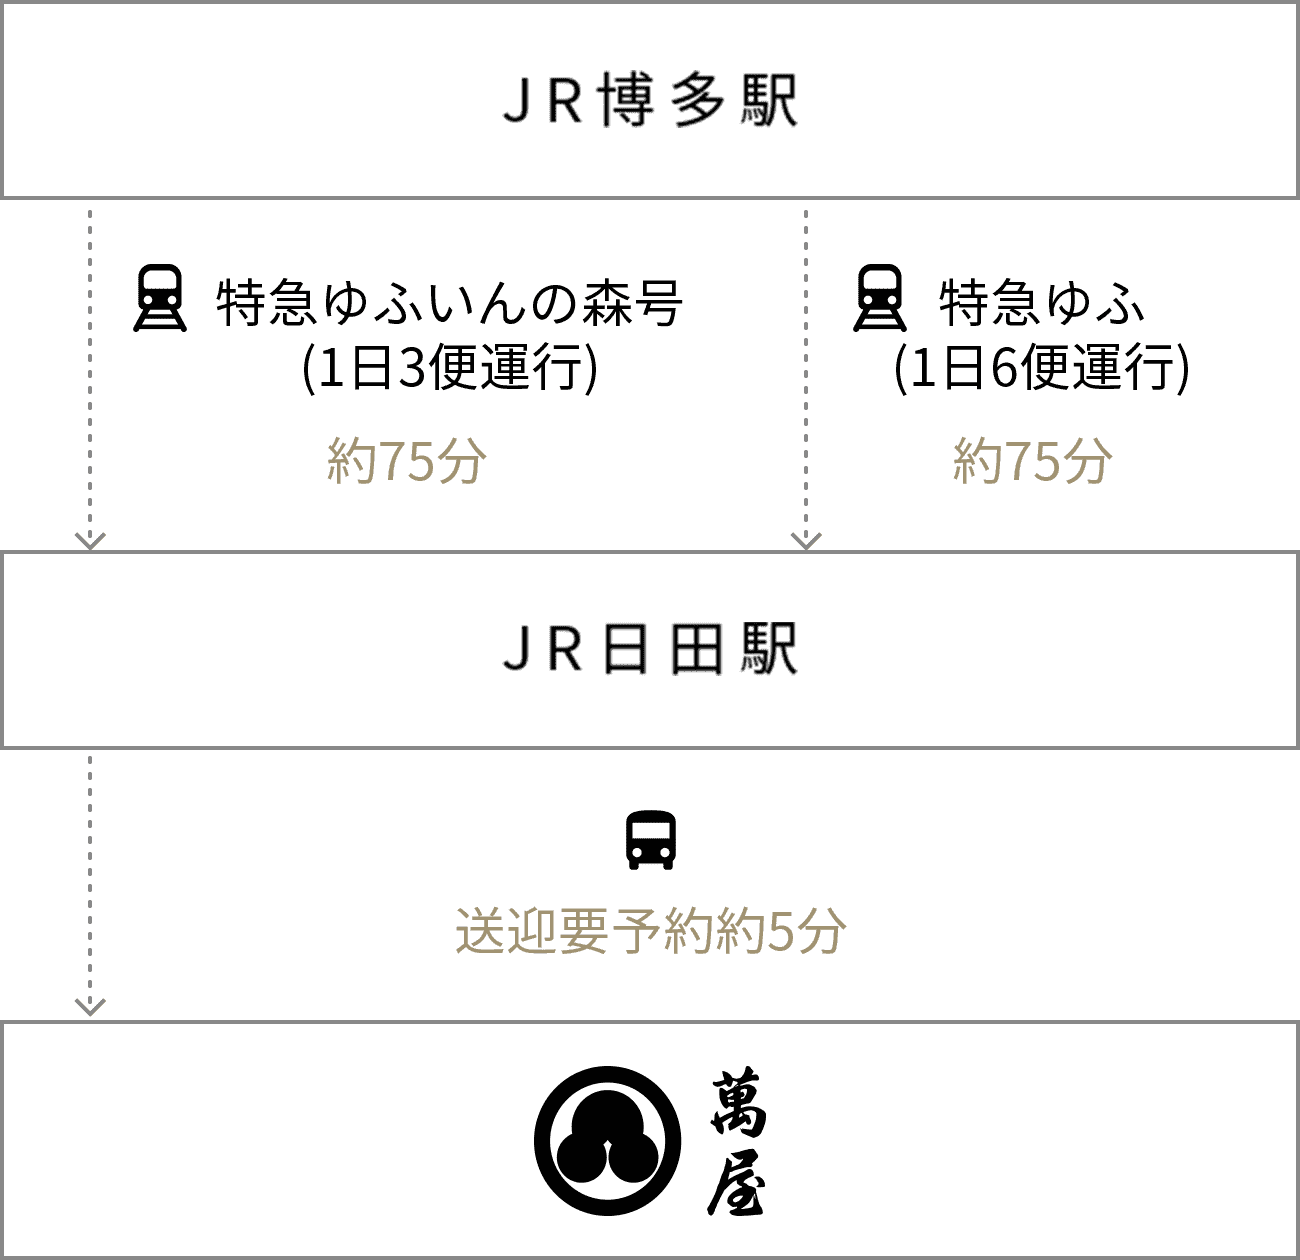 JR博多駅より電車を利用